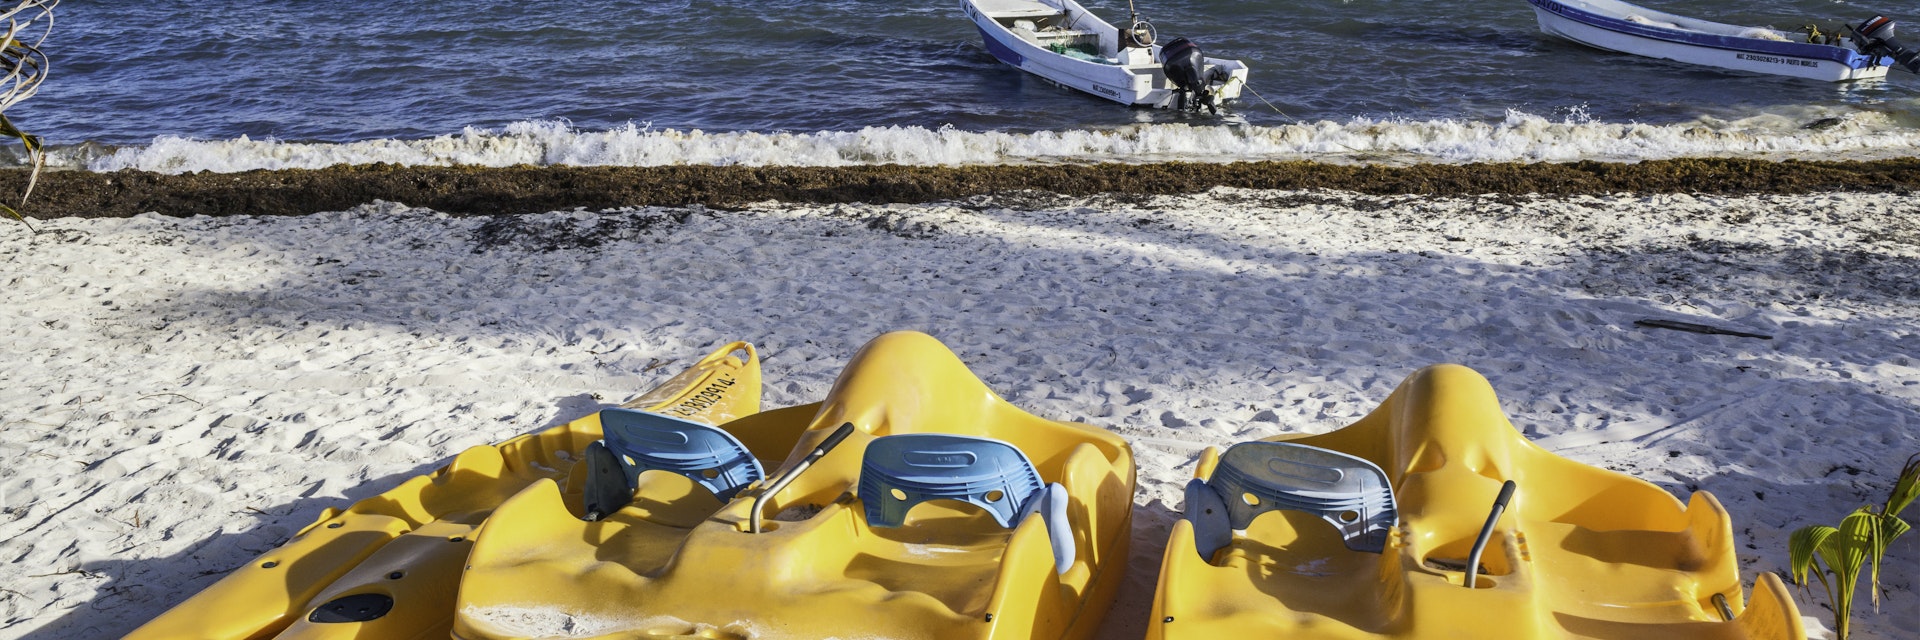 Boats, Caribbean Sea beach, Puerto Morelos, Mexico